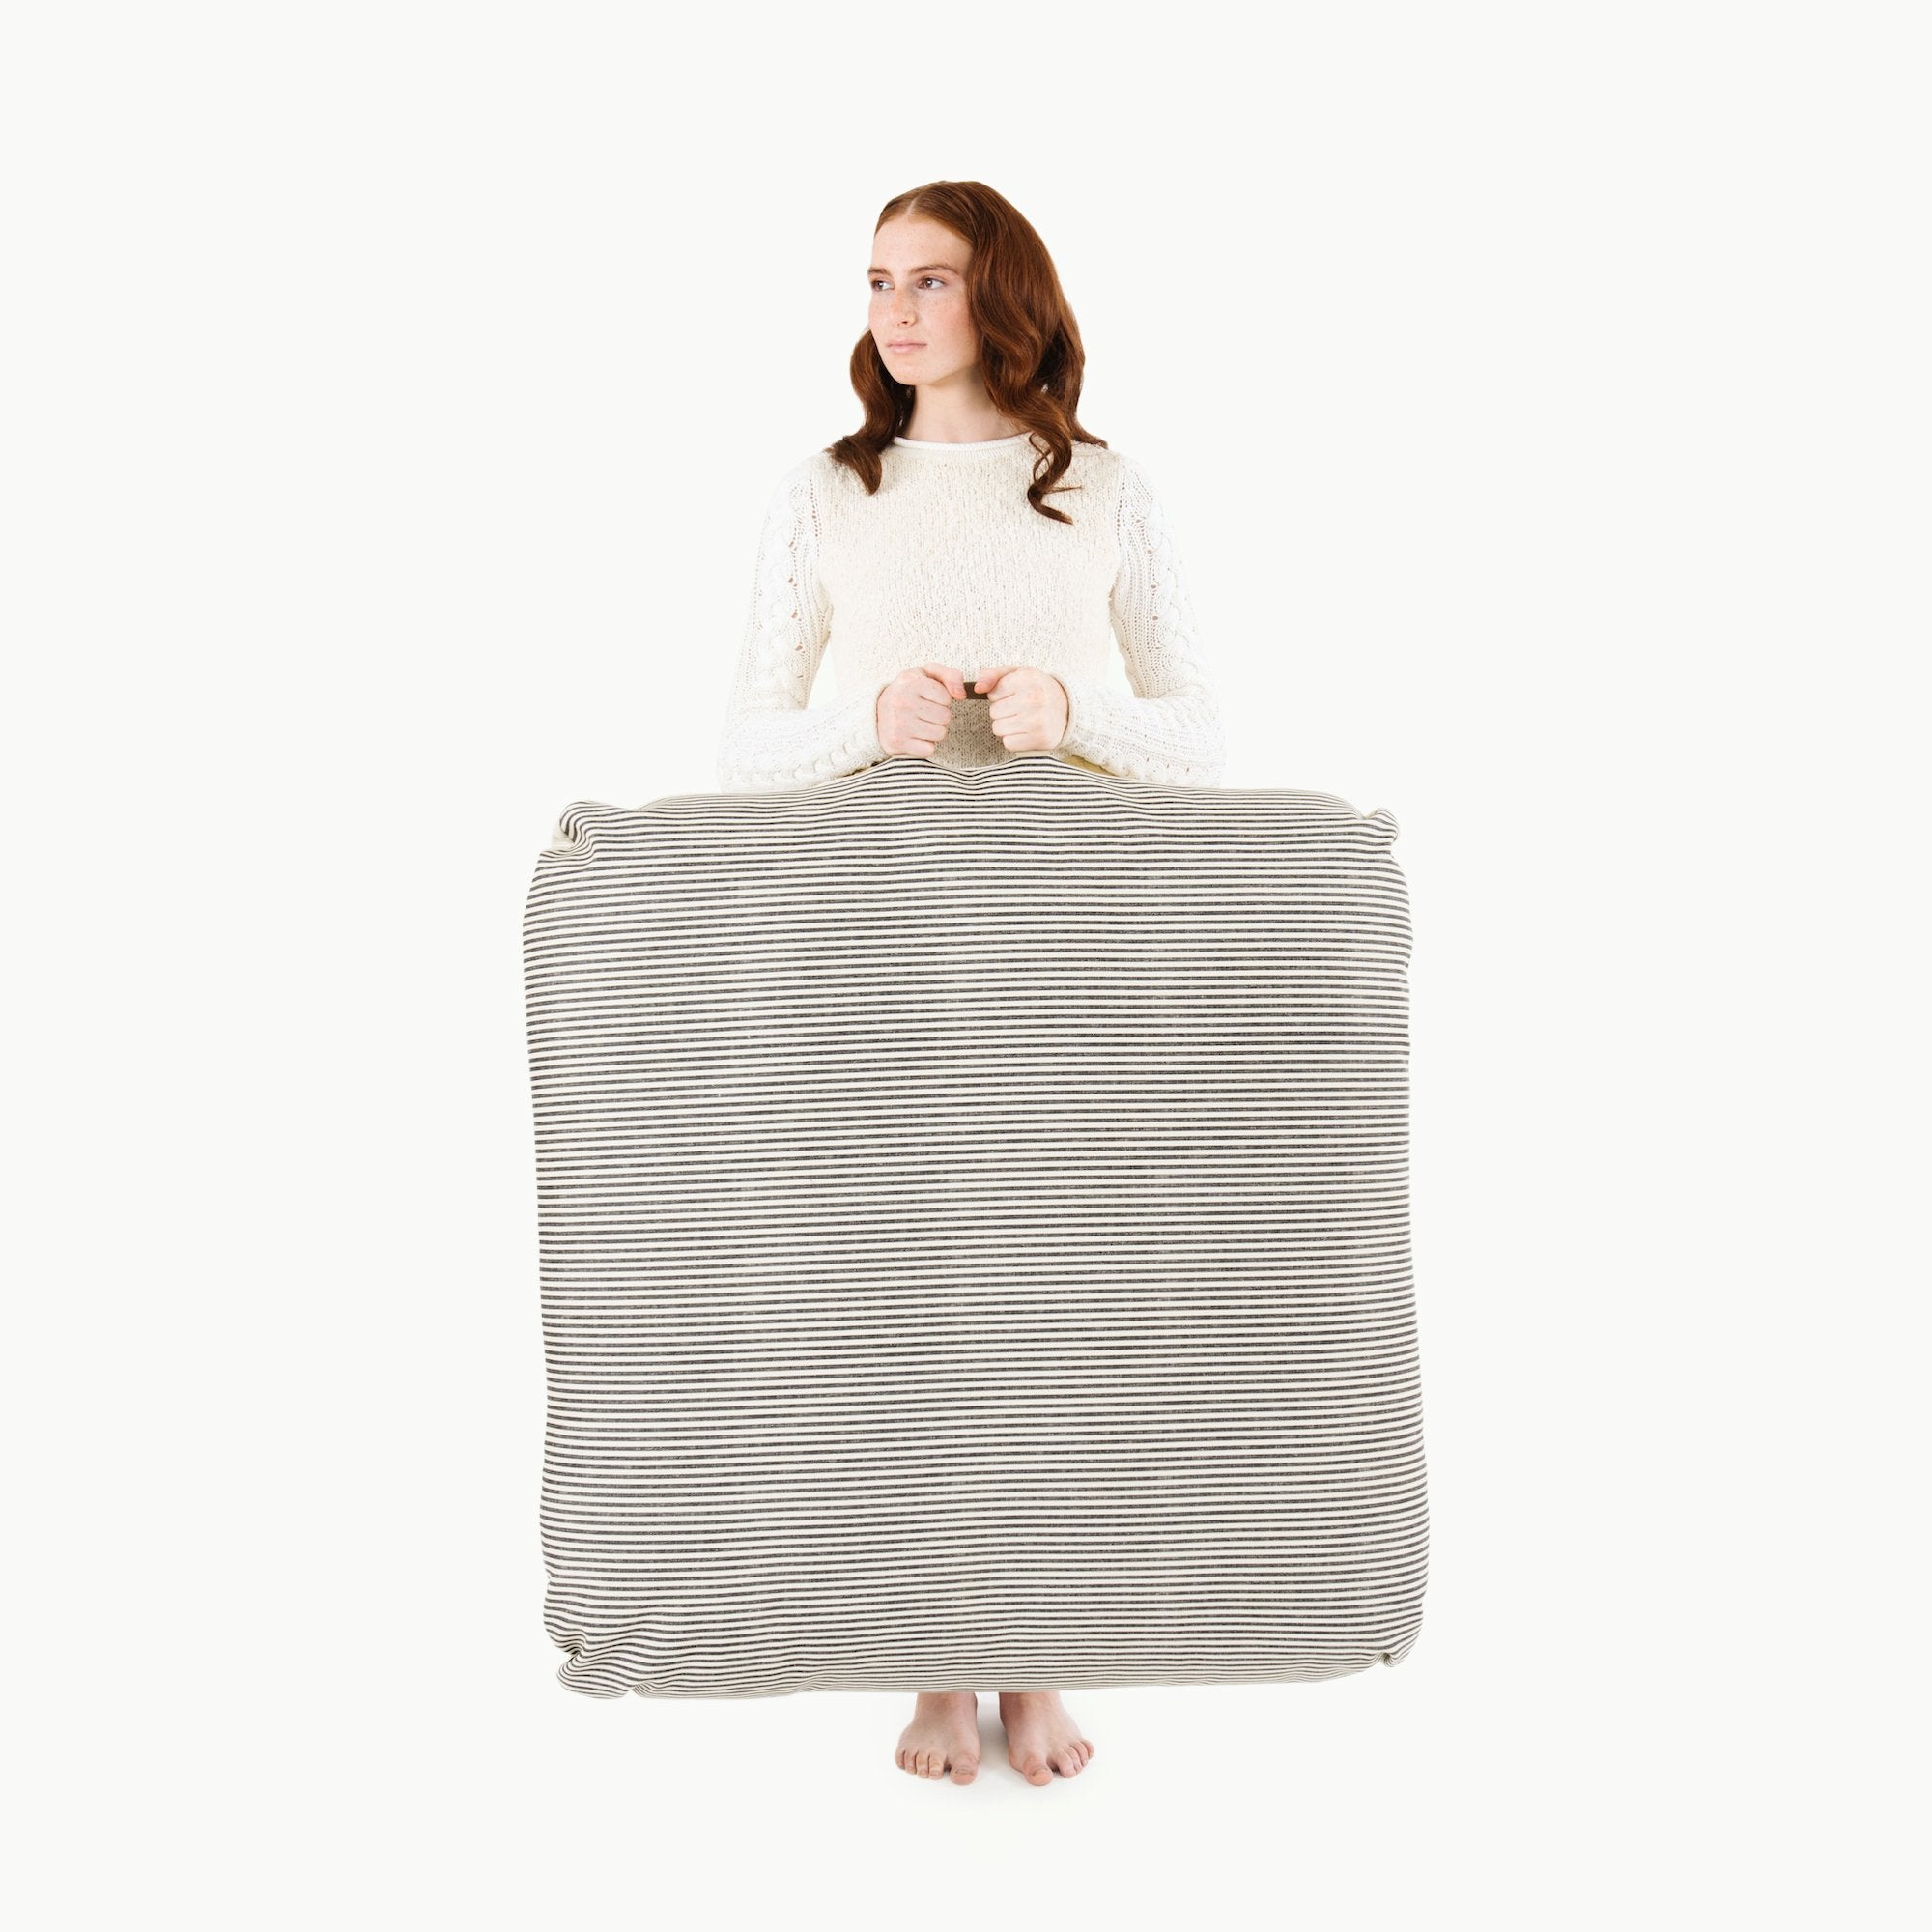 Stone Stripe / Square@Woman holding the Stone Stripe Square Floor Cushion